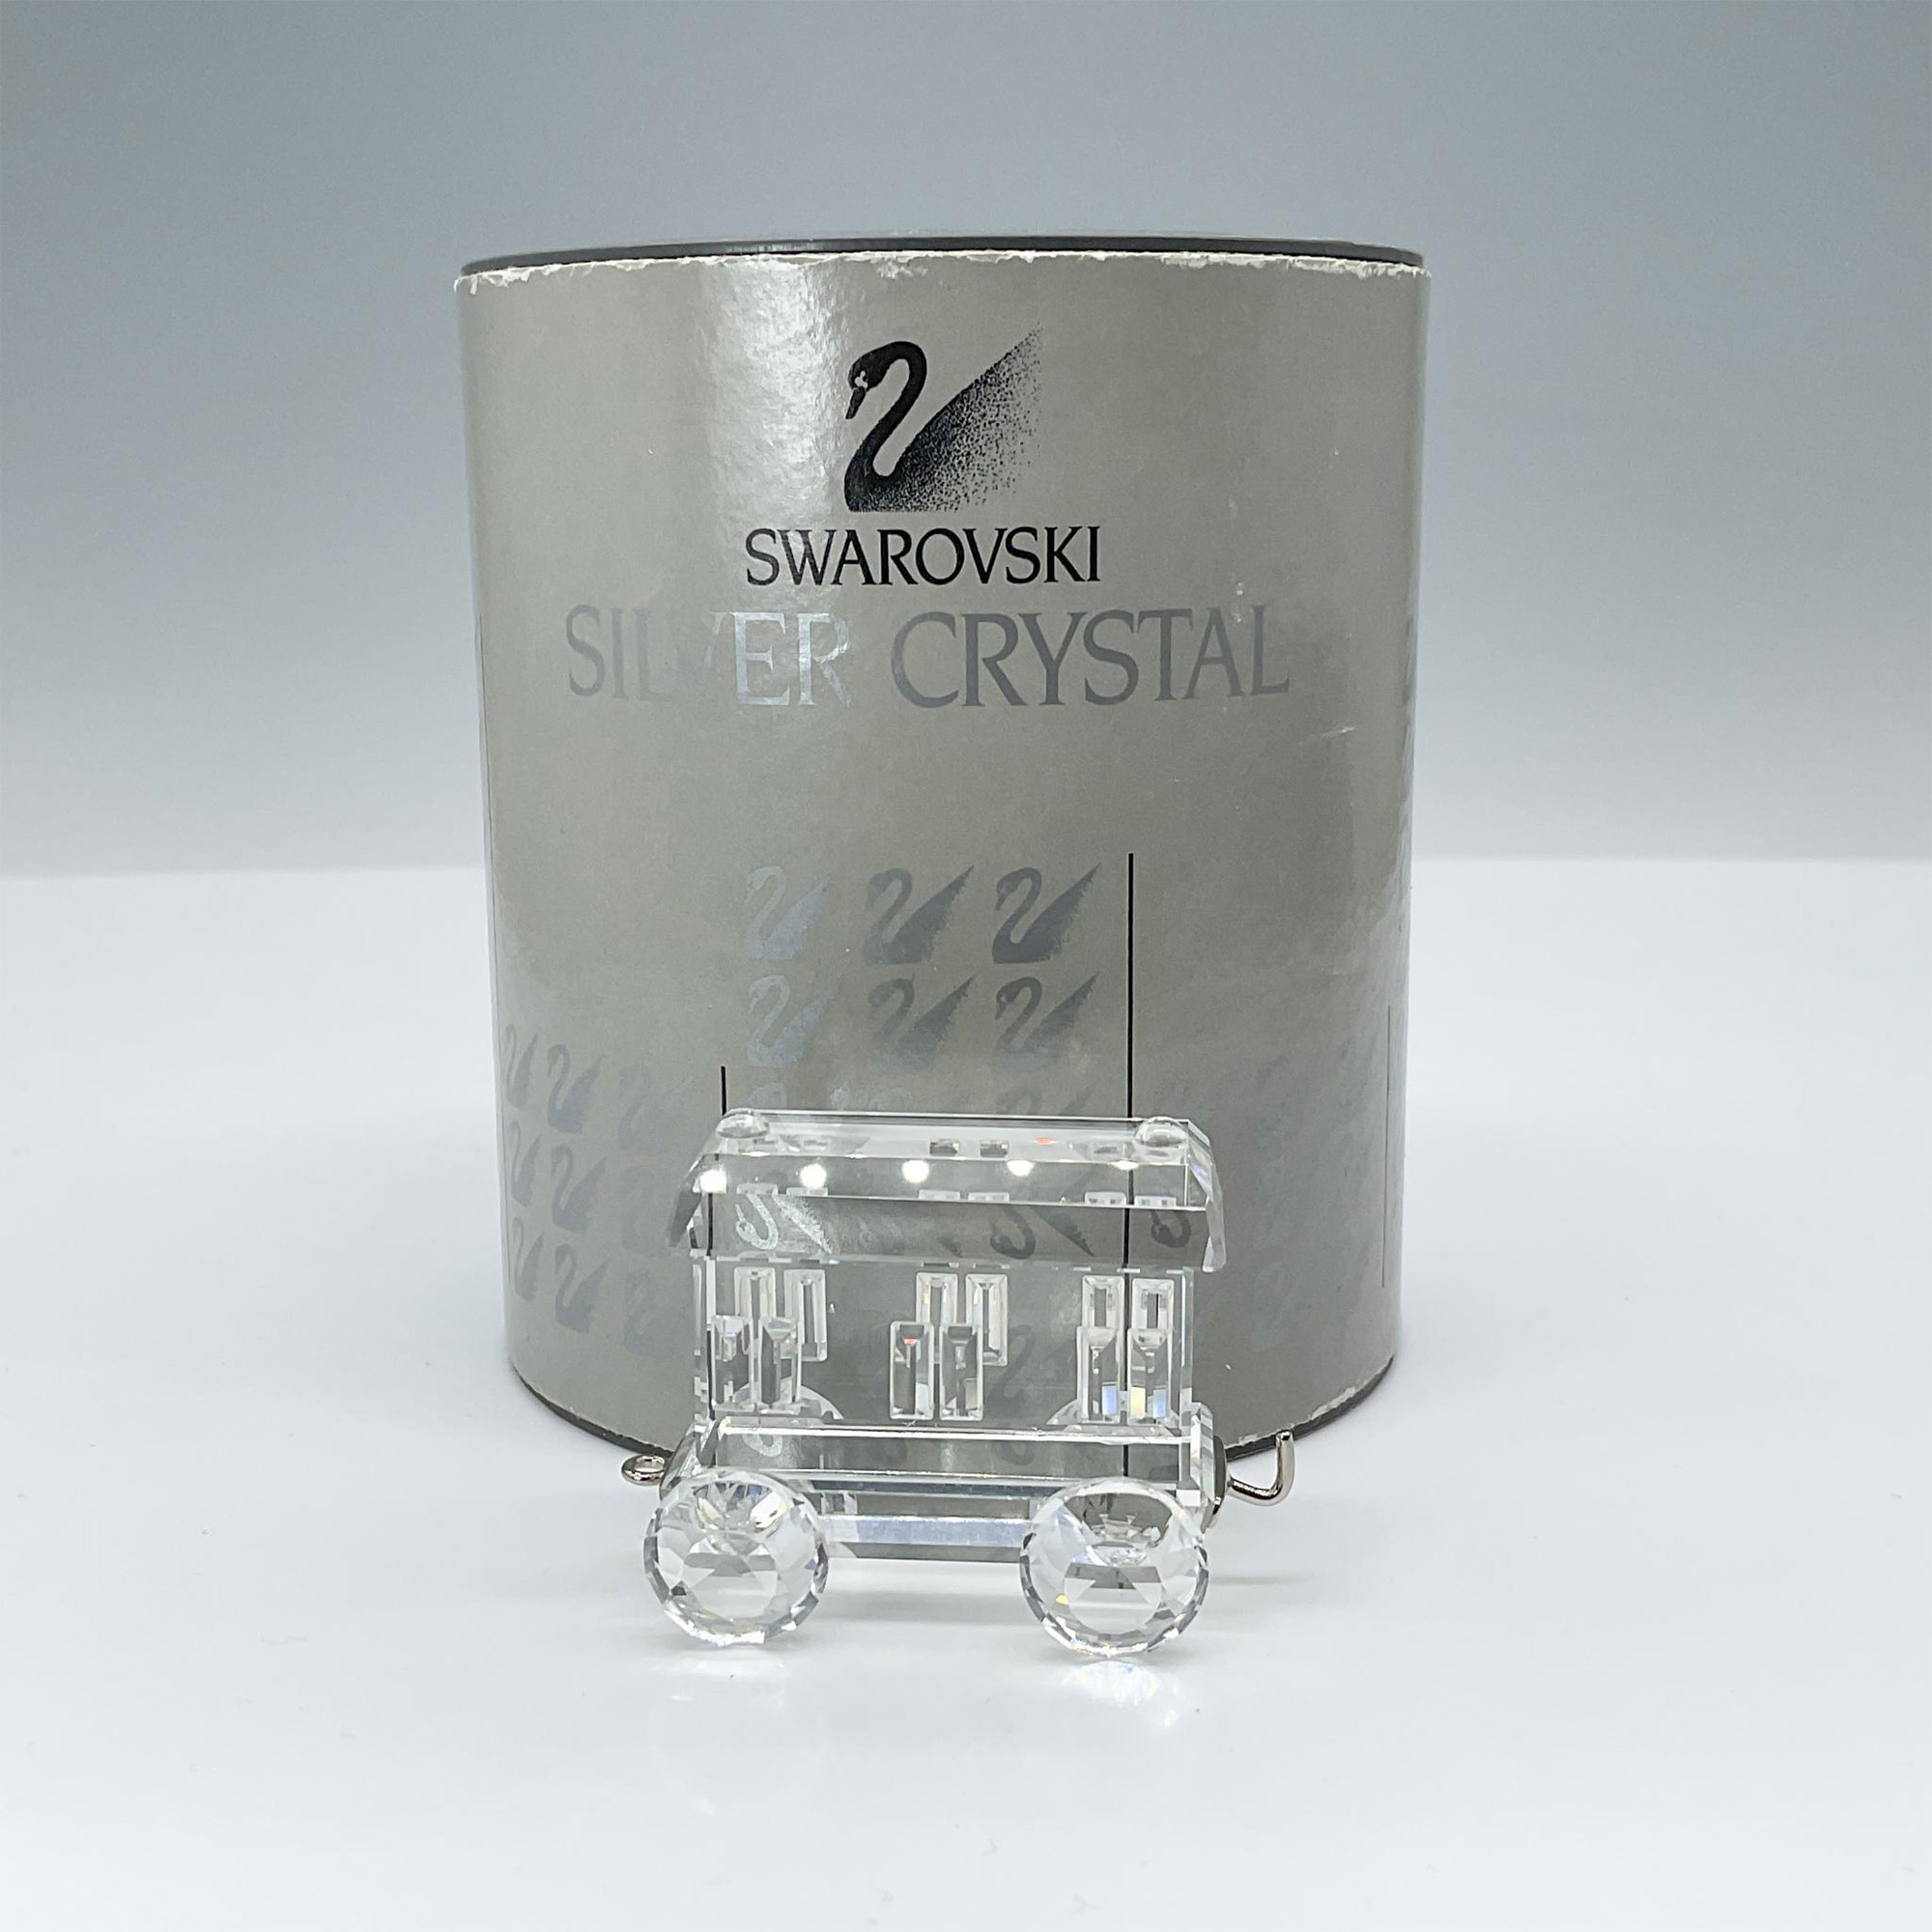 Swarovski Silver Crystal Figurine, Train Passenger Car - Image 4 of 4